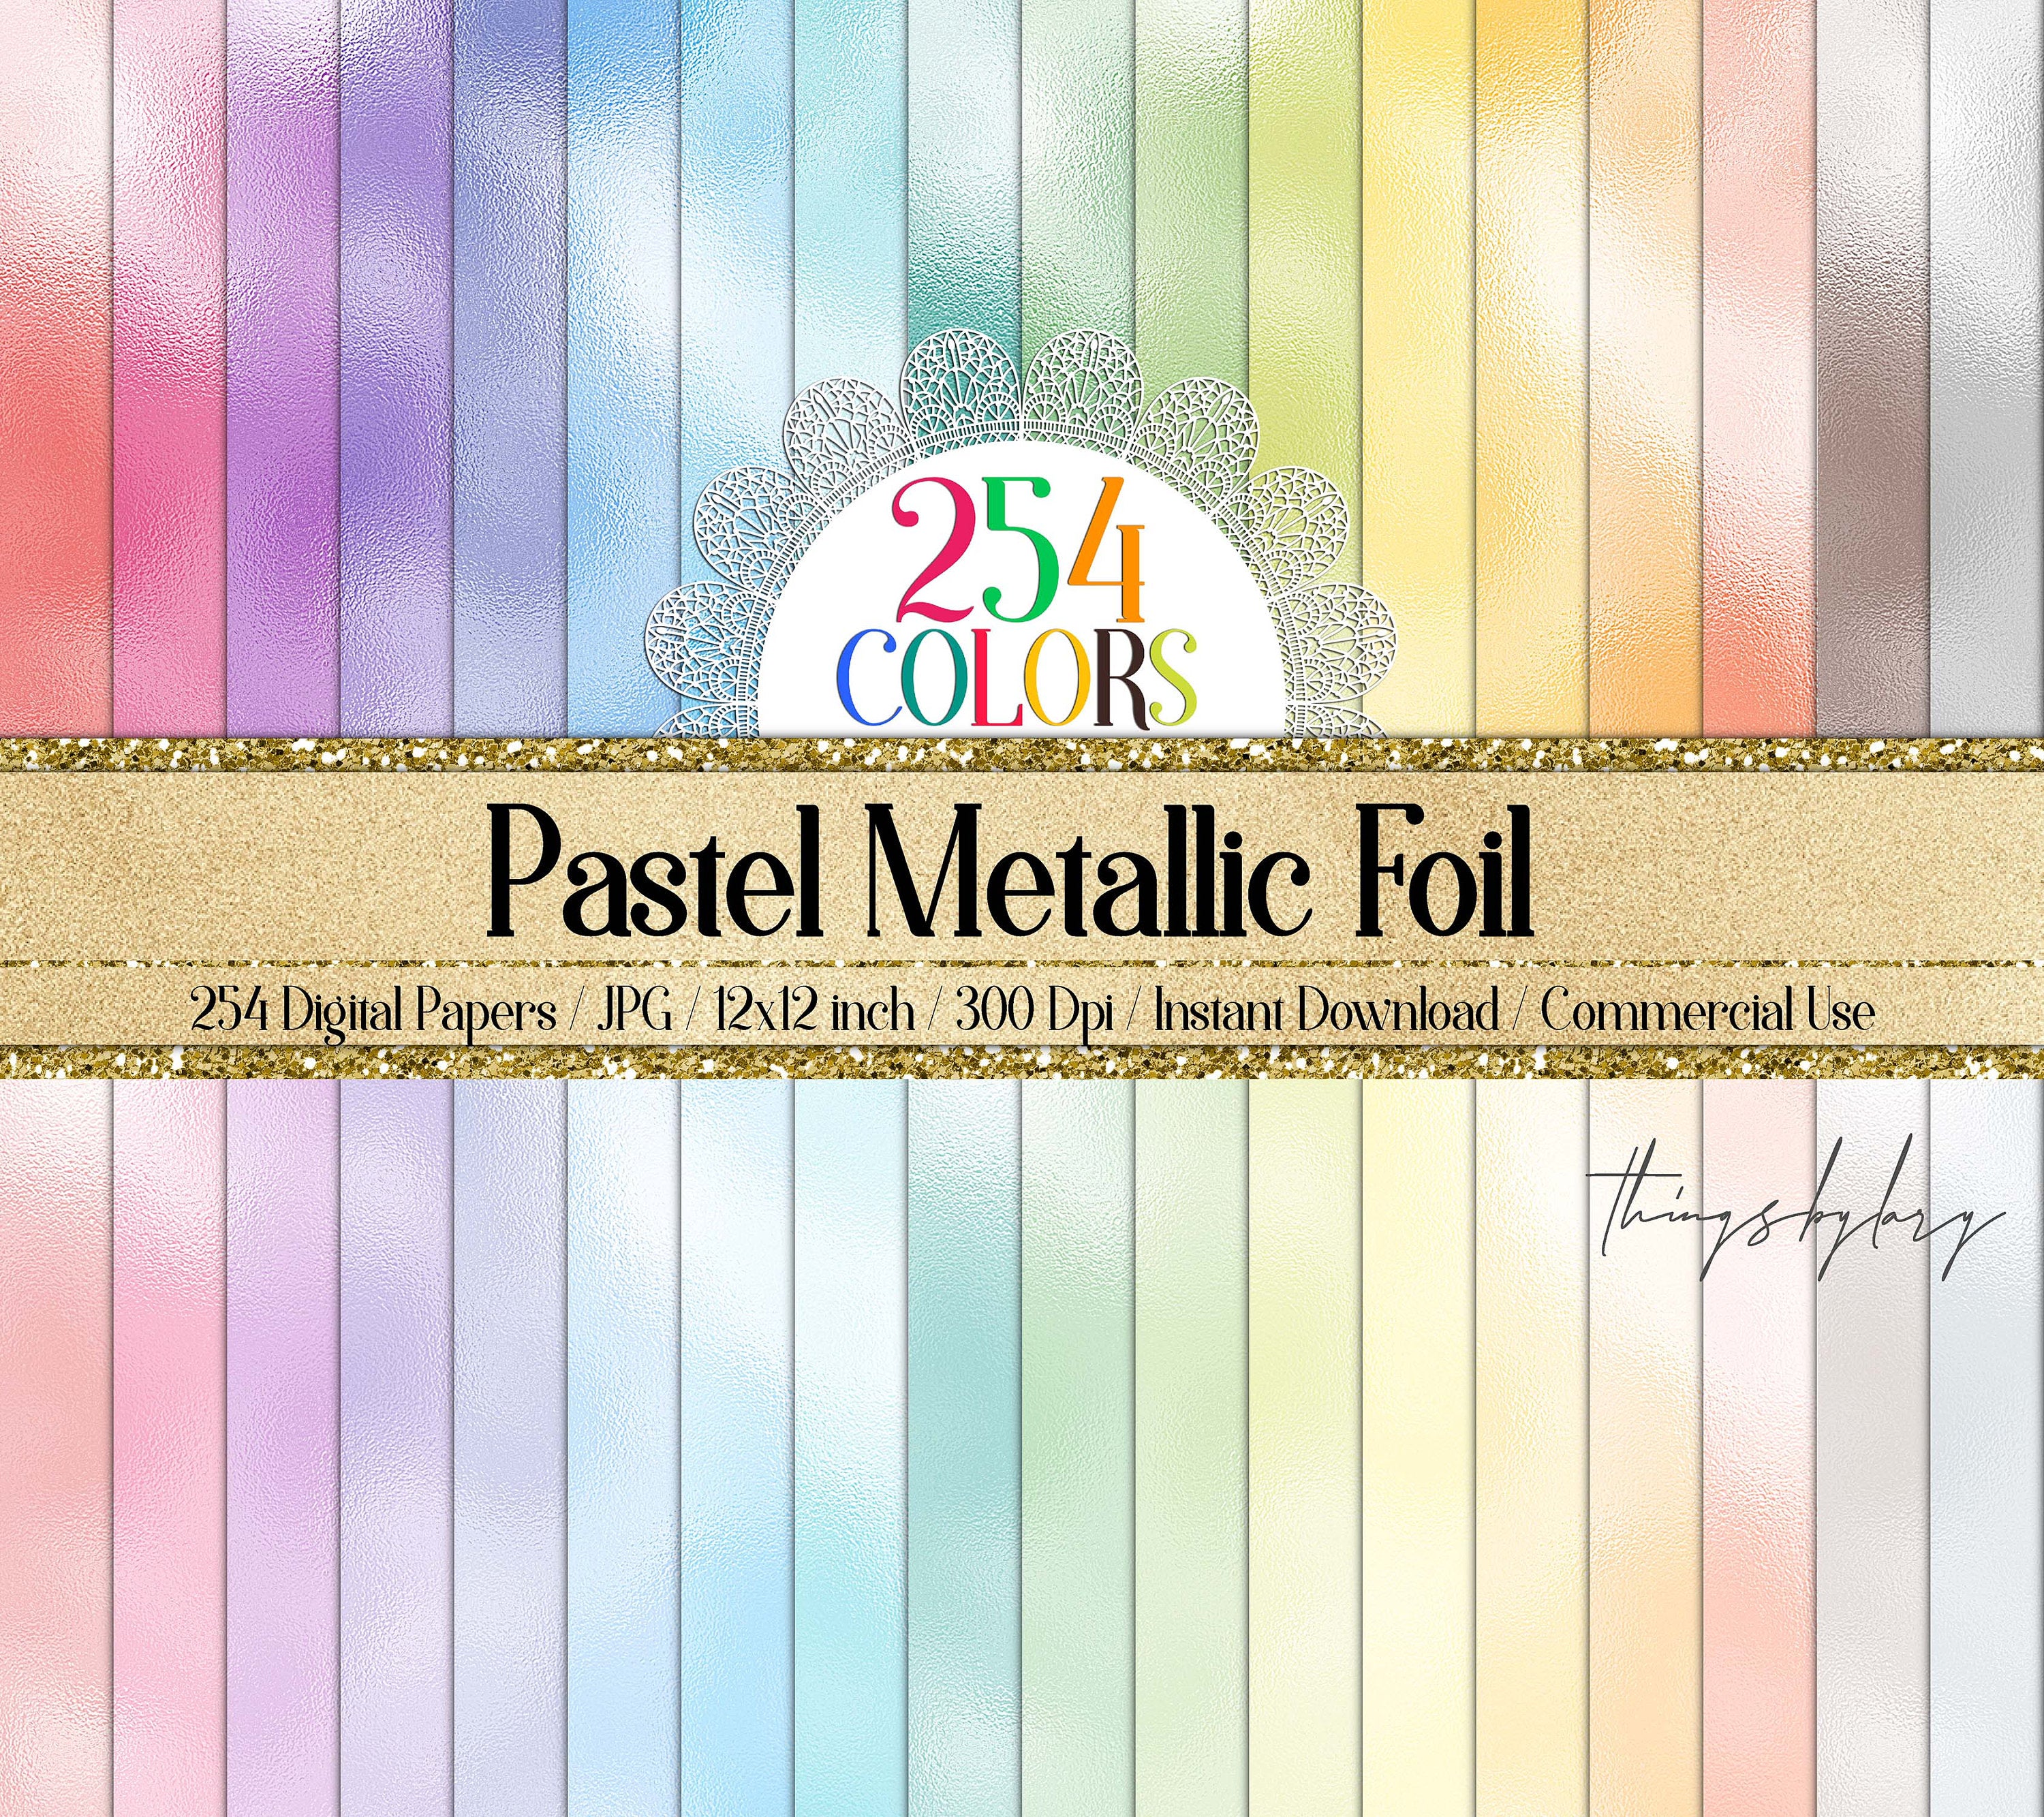 254 Pastel Foil Metallic Digital Images 12 inch 300 Dpi Instant Download Commercial Use Metallic Texture Luxury Gradient Digital Papers